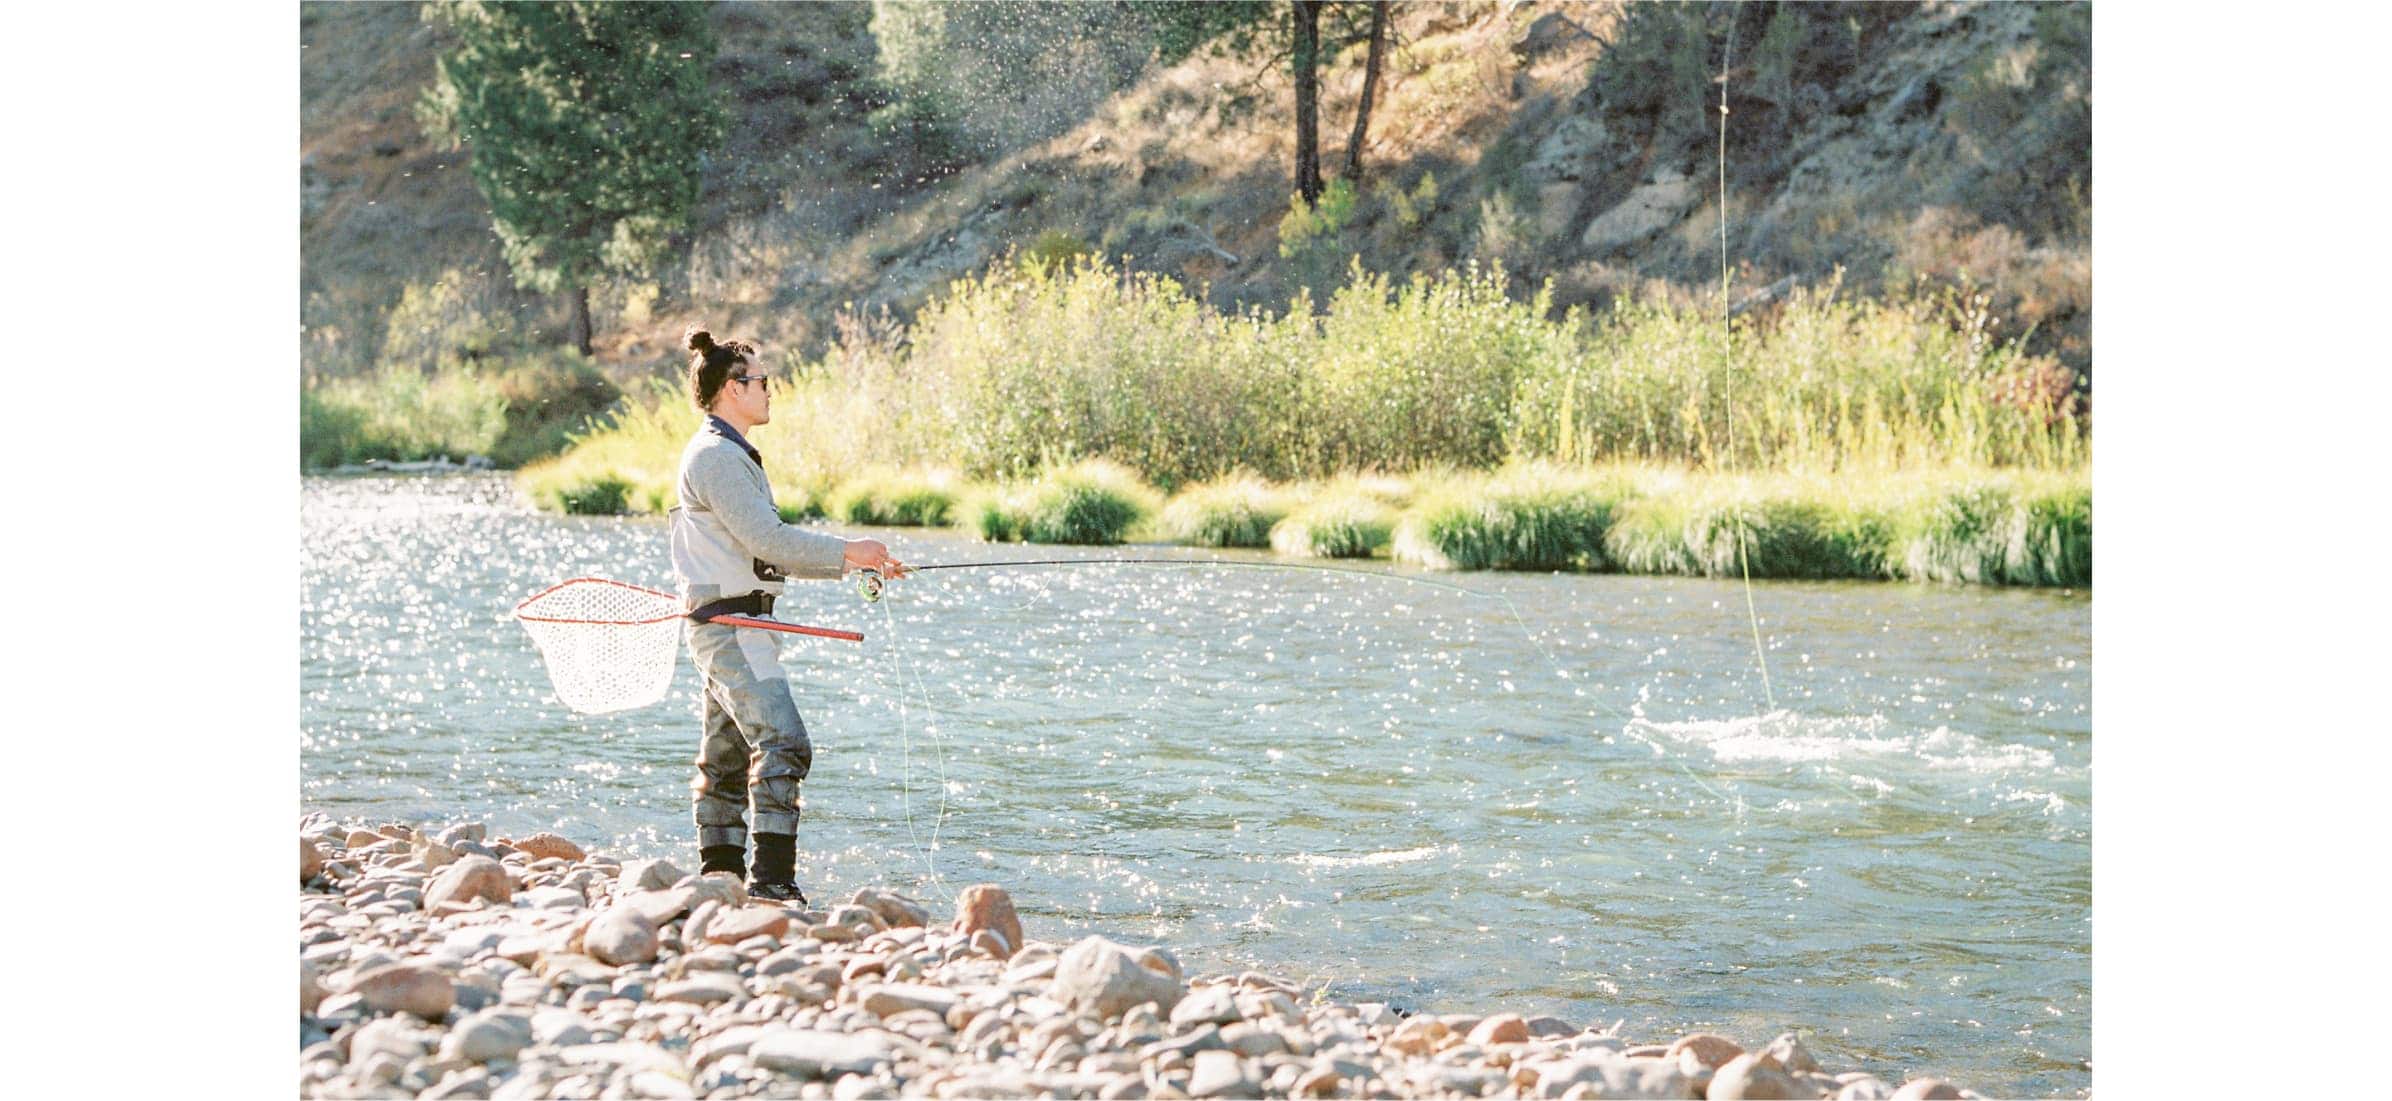 Burton Li, founder of accounting firm Sutro Li, fishing in a river. 